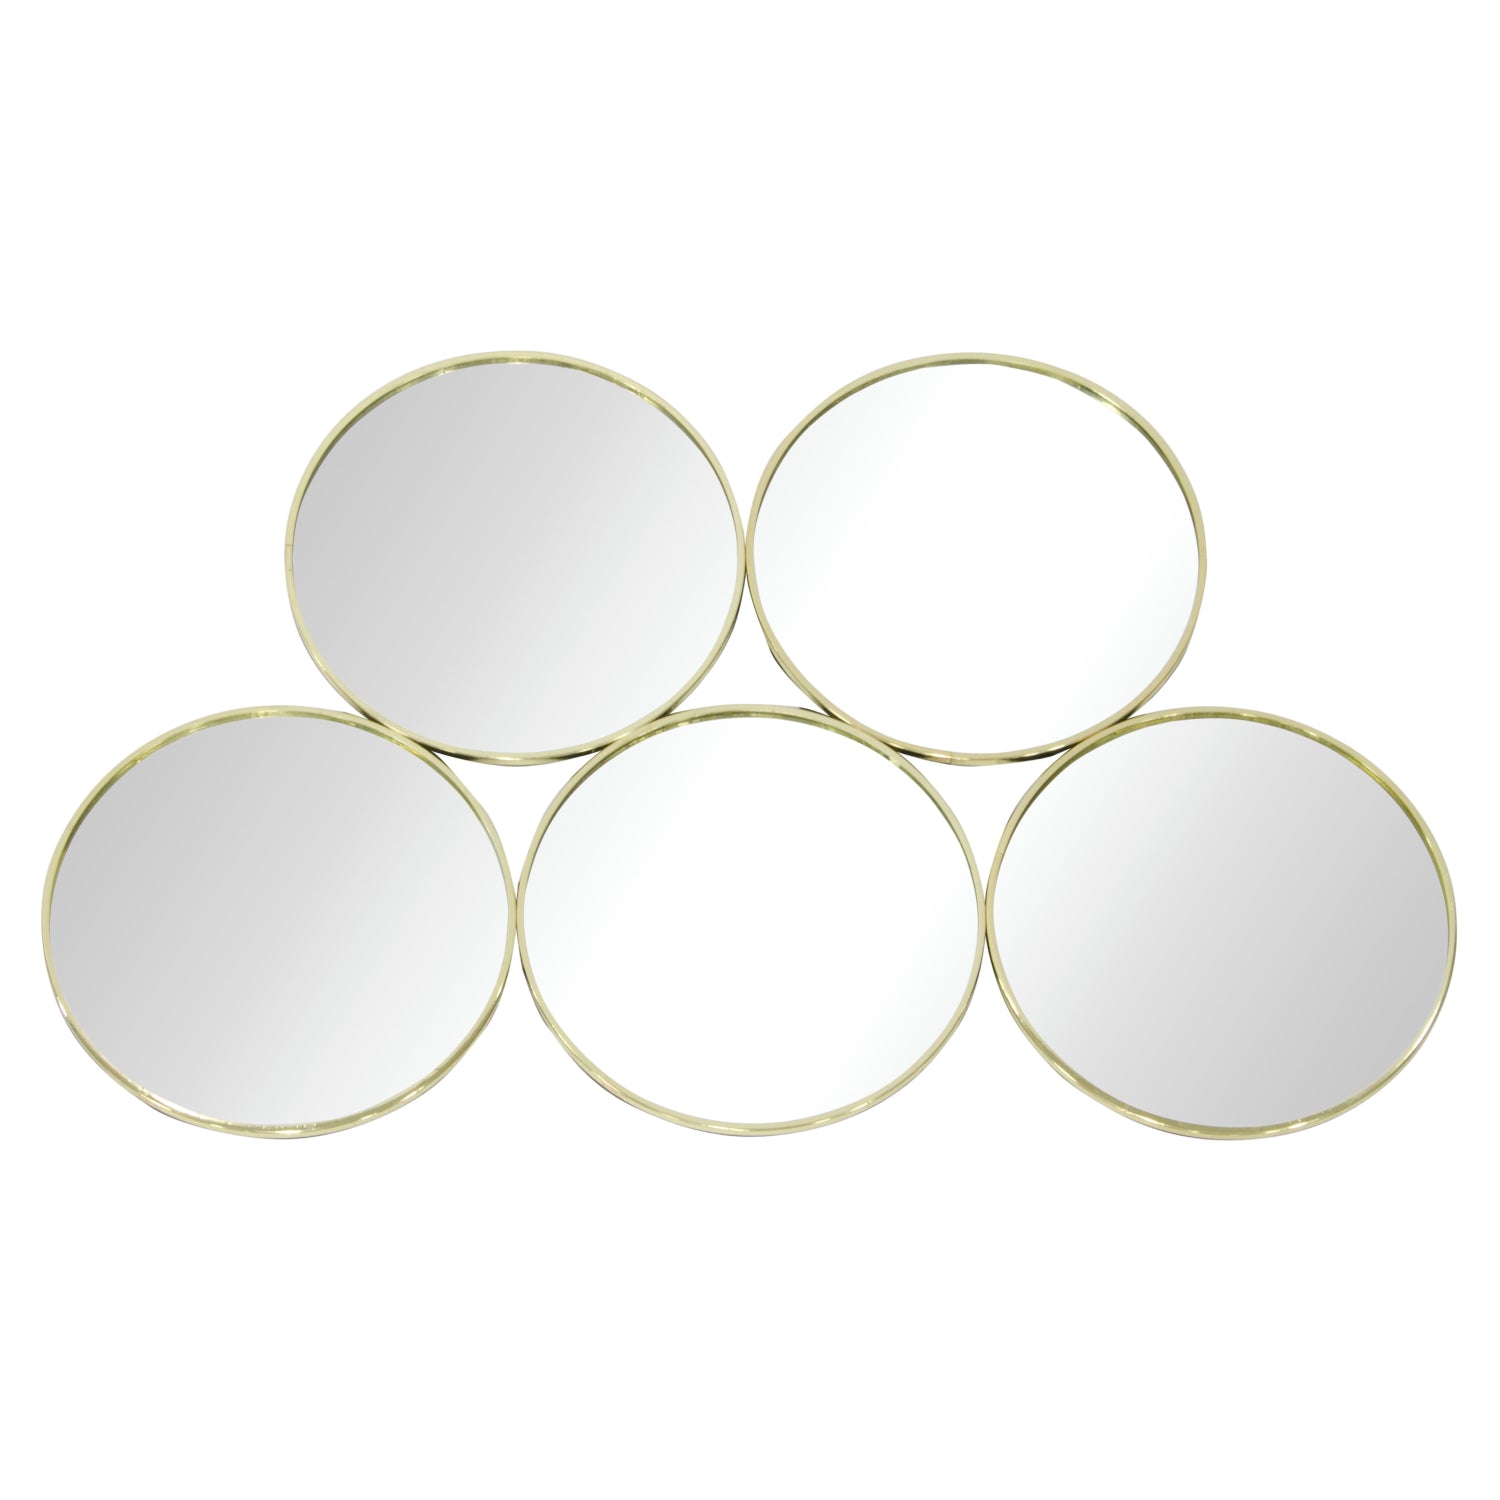 5 Circles gold mirror by Native